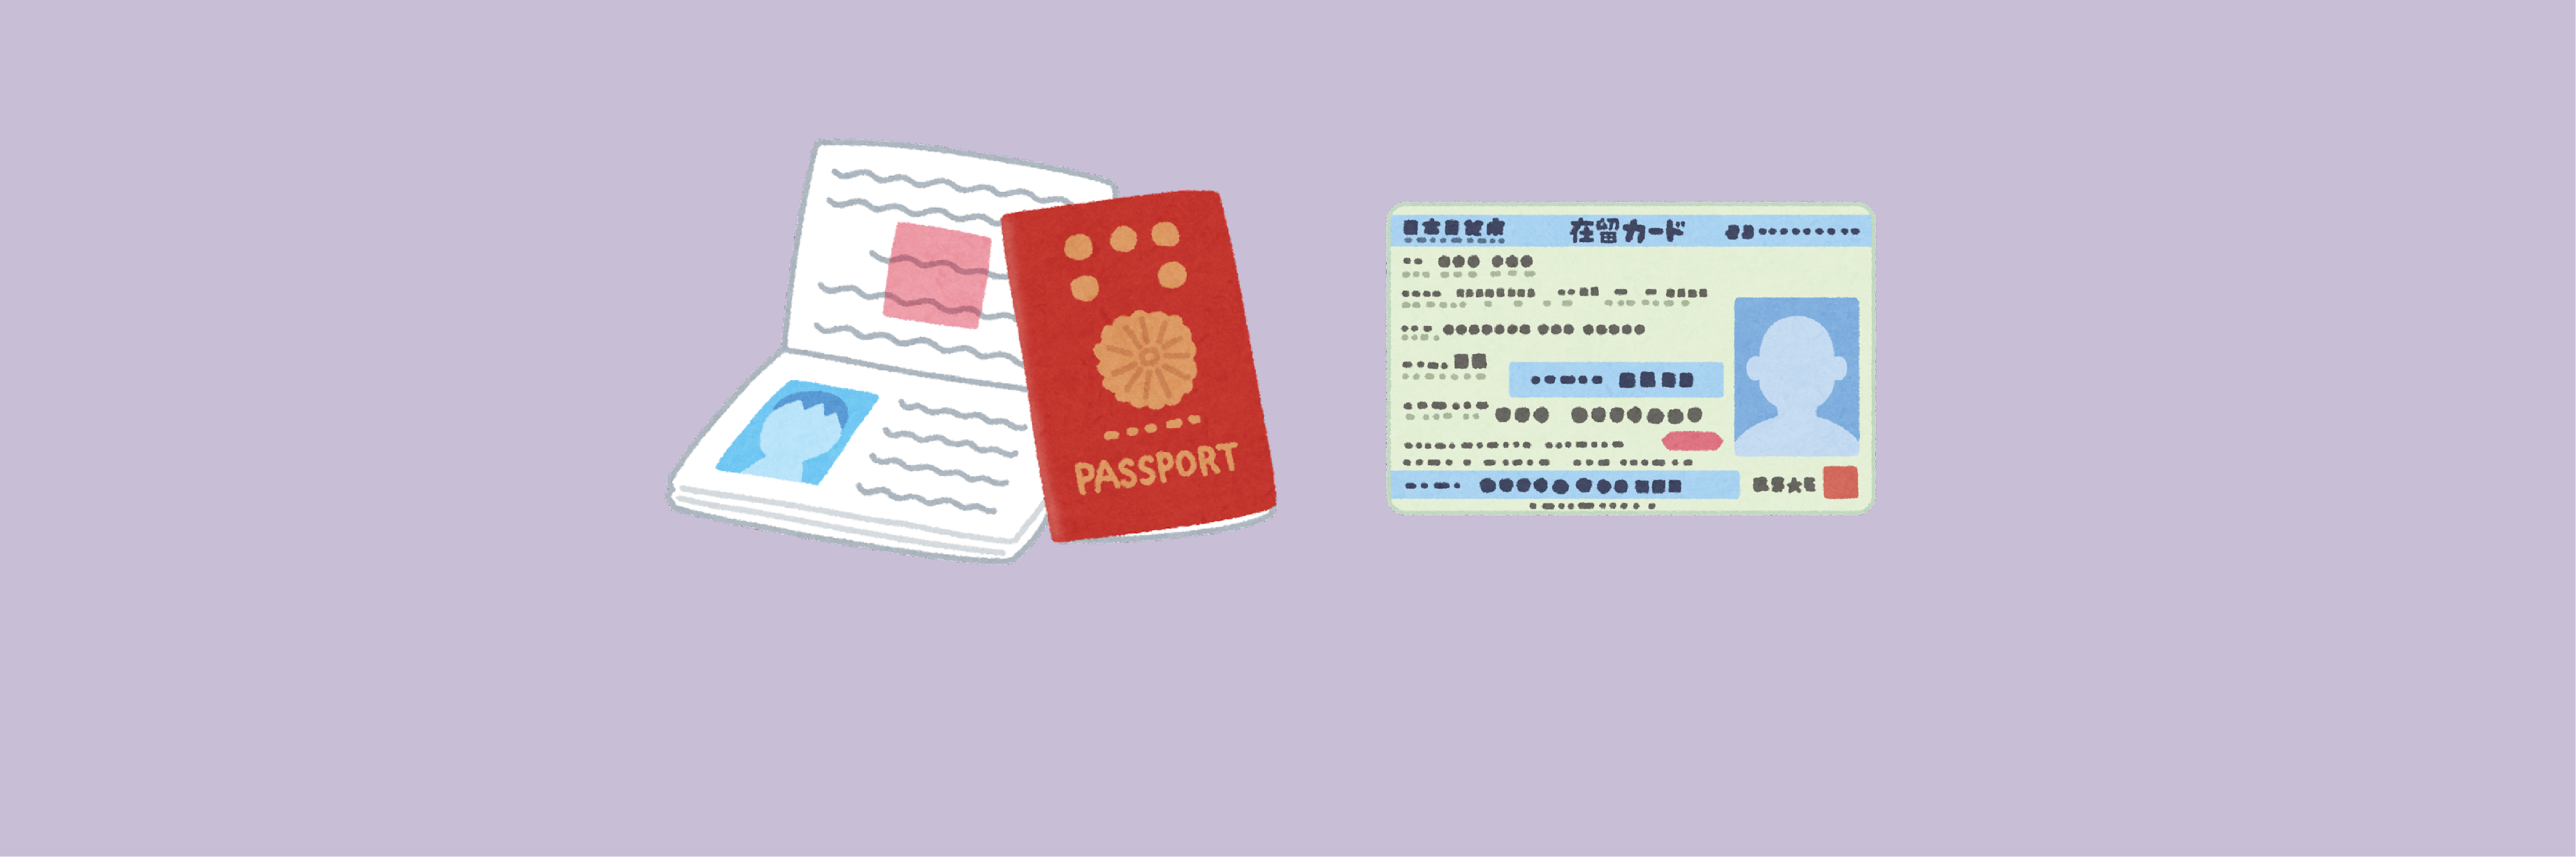 Residence Card Passport